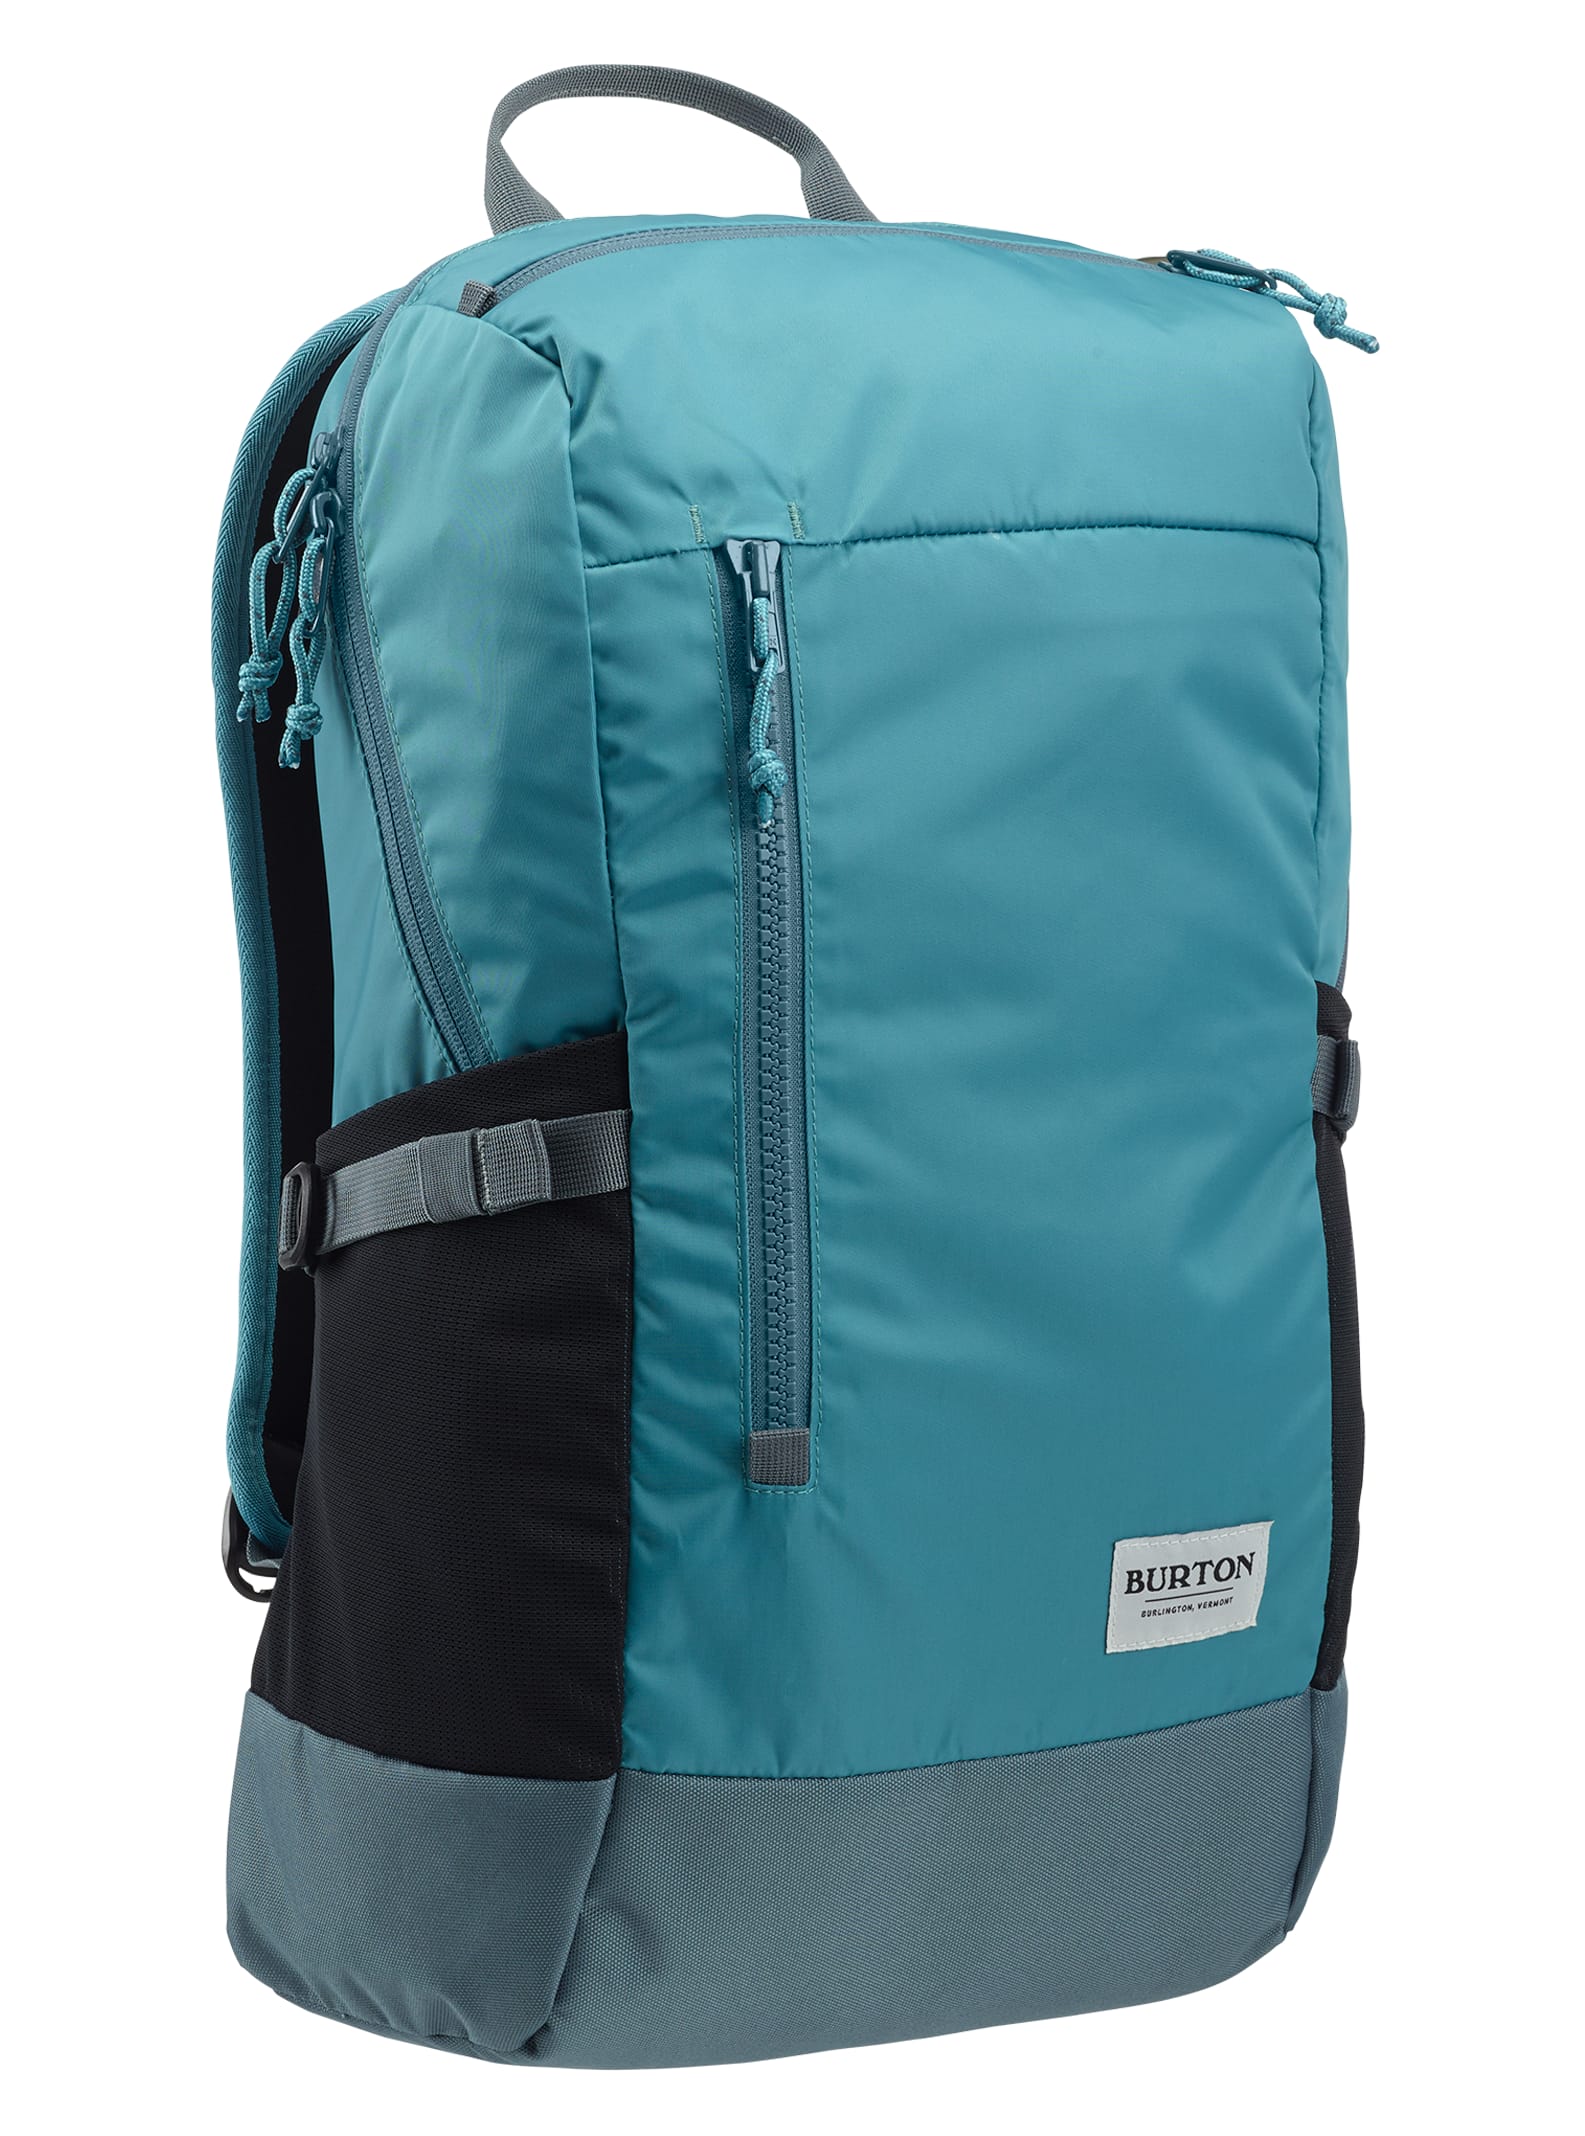 Burton Prospect 2.0 20L Backpack | Burton.com Winter 2020 AT